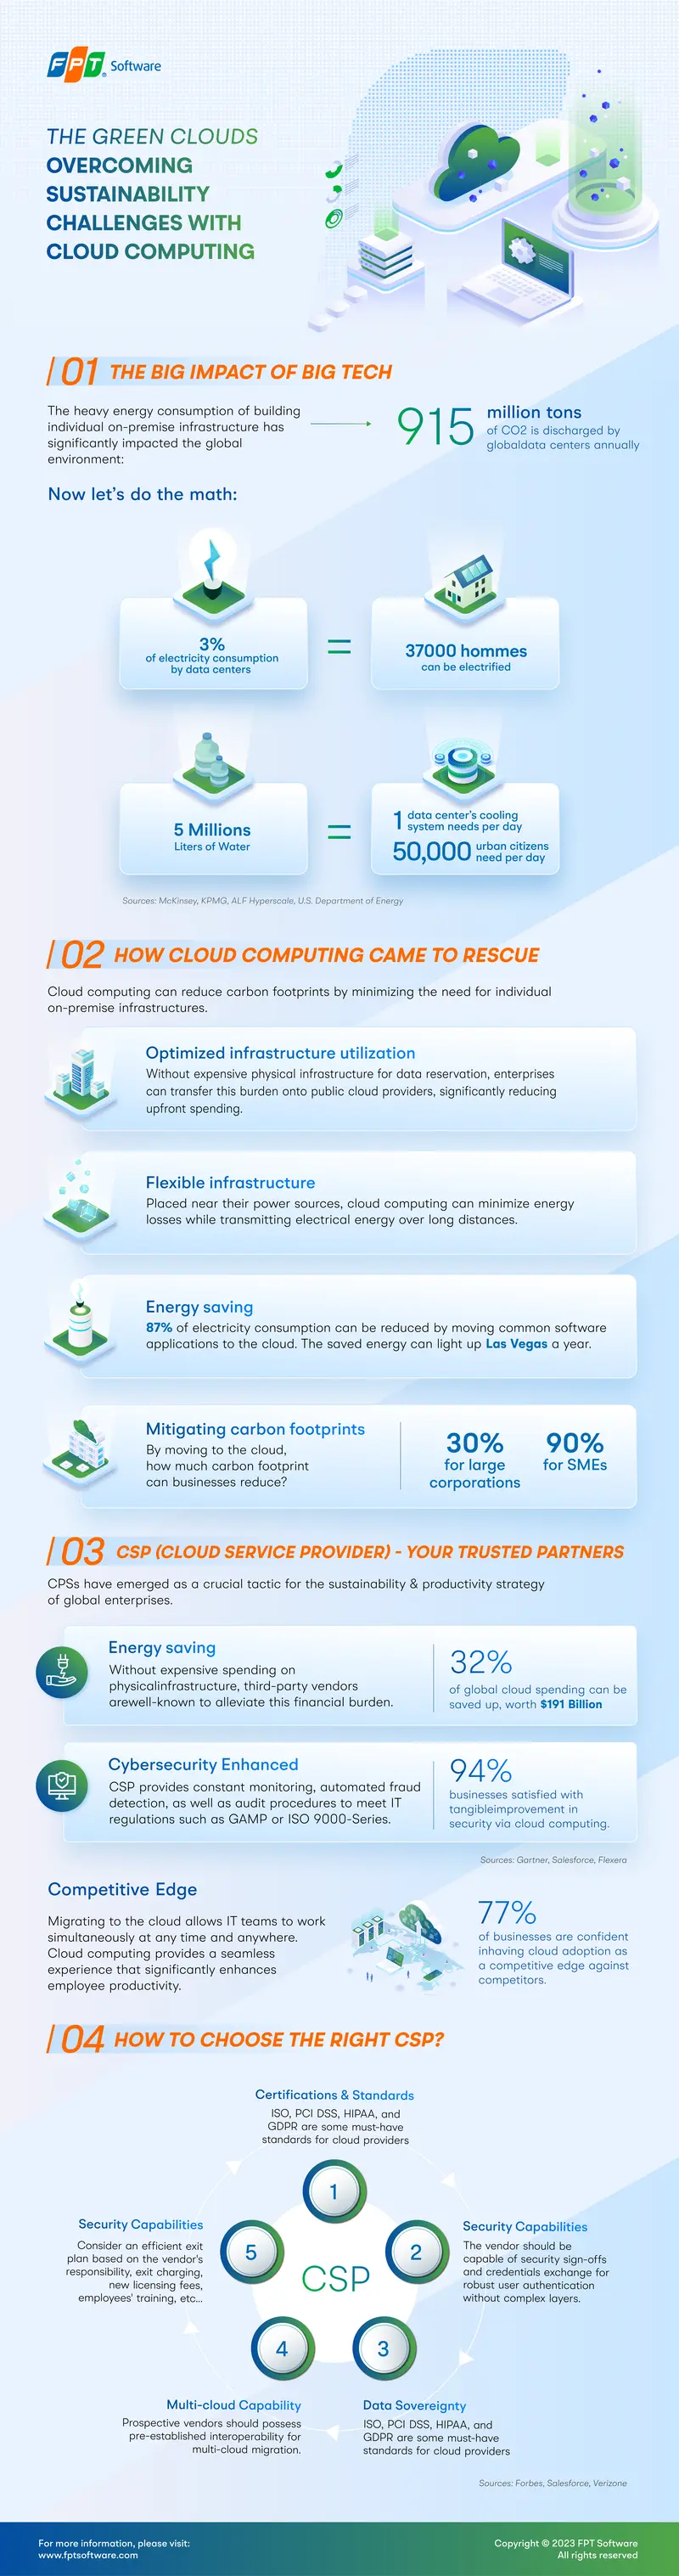 Cloud Computing Sustainabilty